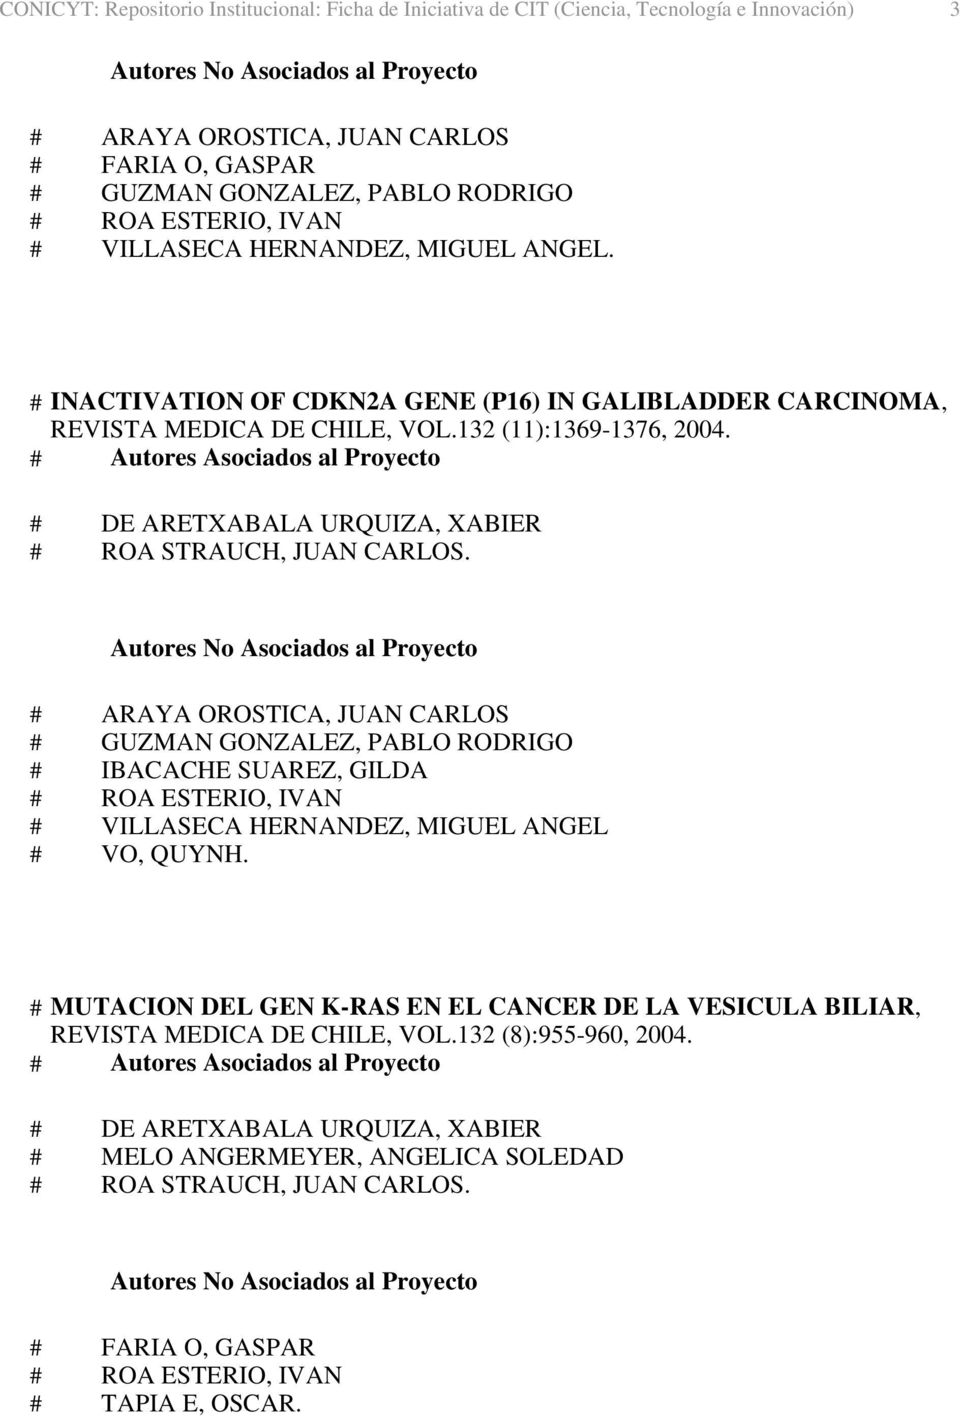 # INACTIVATION OF CDKN2A GENE (P16) IN GALIBLADDER CARCINOMA, REVISTA MEDICA DE CHILE, VOL.